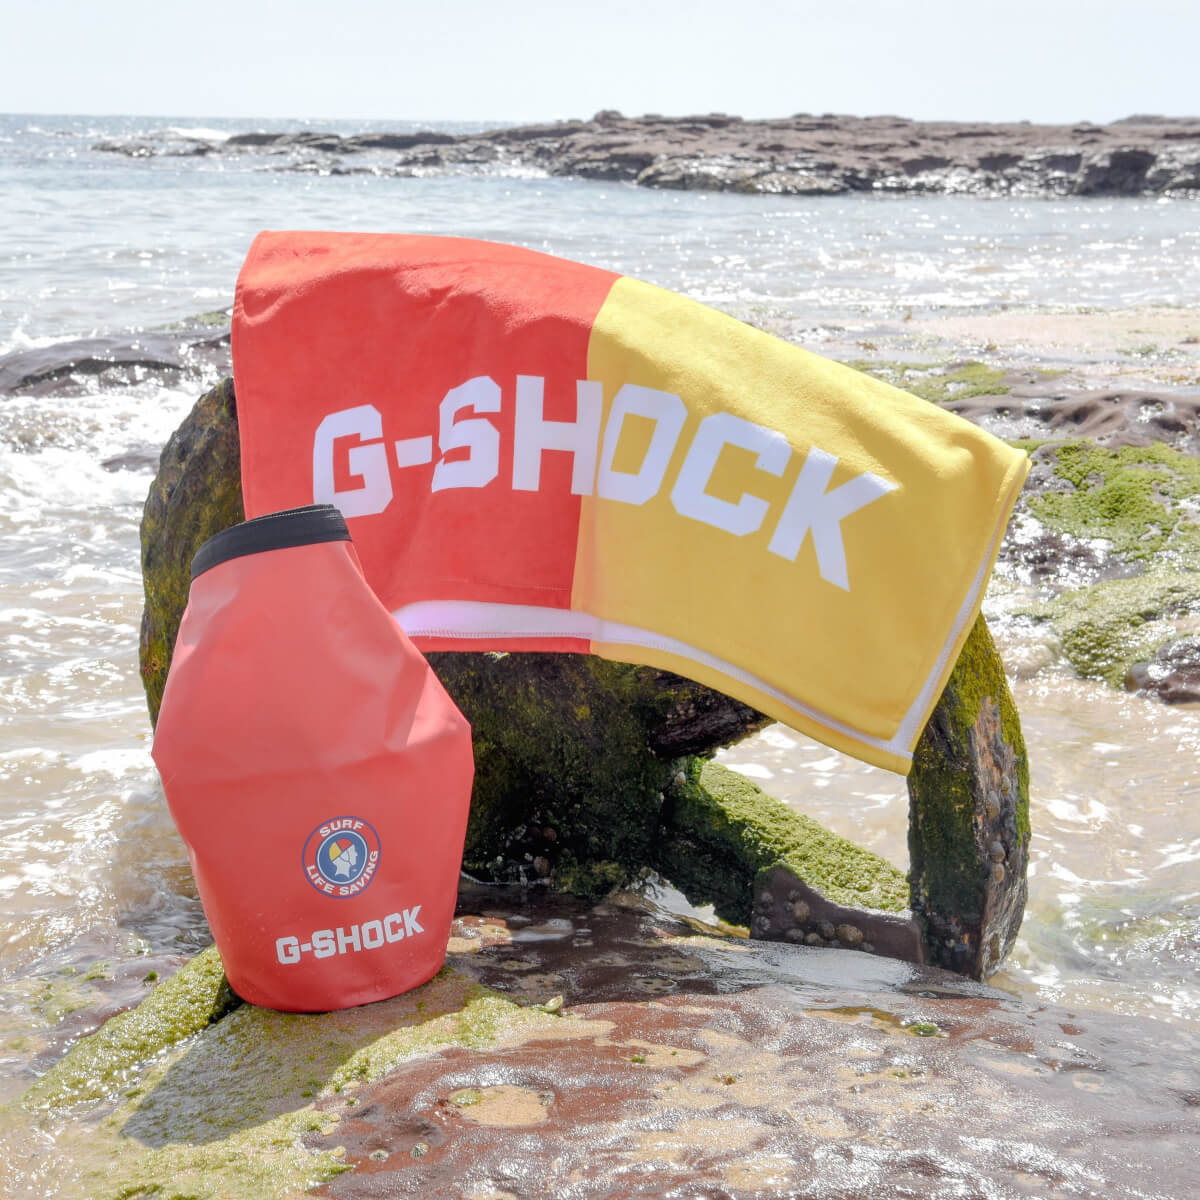 Casio G-Shock GLX5600 Surf Life Saving Australia